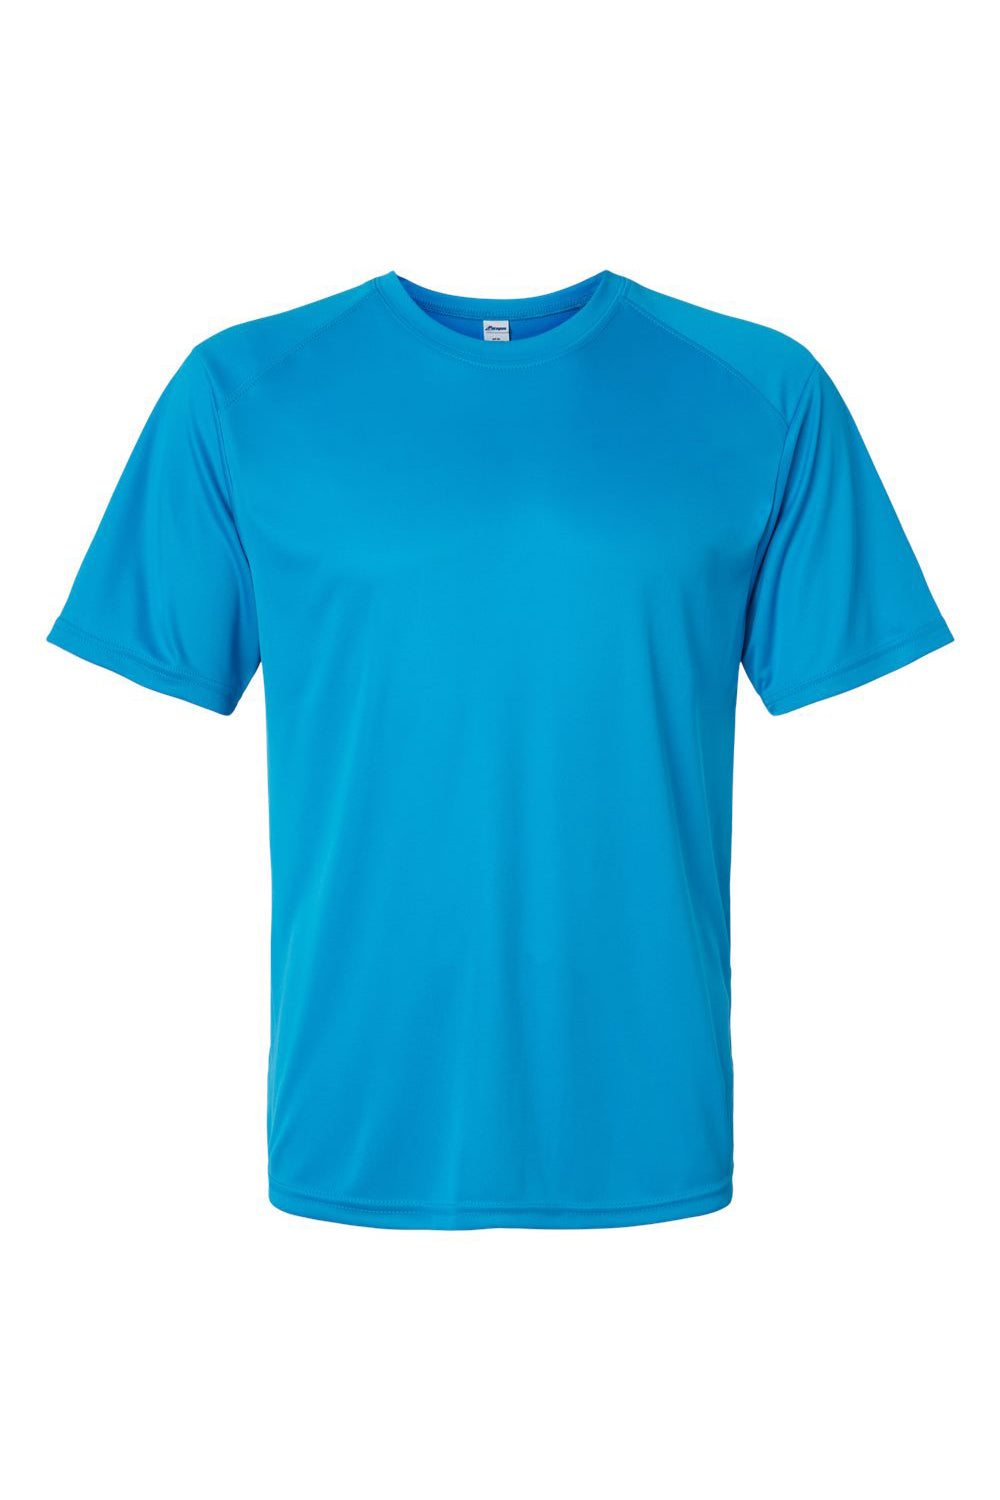 Paragon 200 Mens Islander Performance Short Sleeve Crewneck T-Shirt Turquoise Blue Flat Front